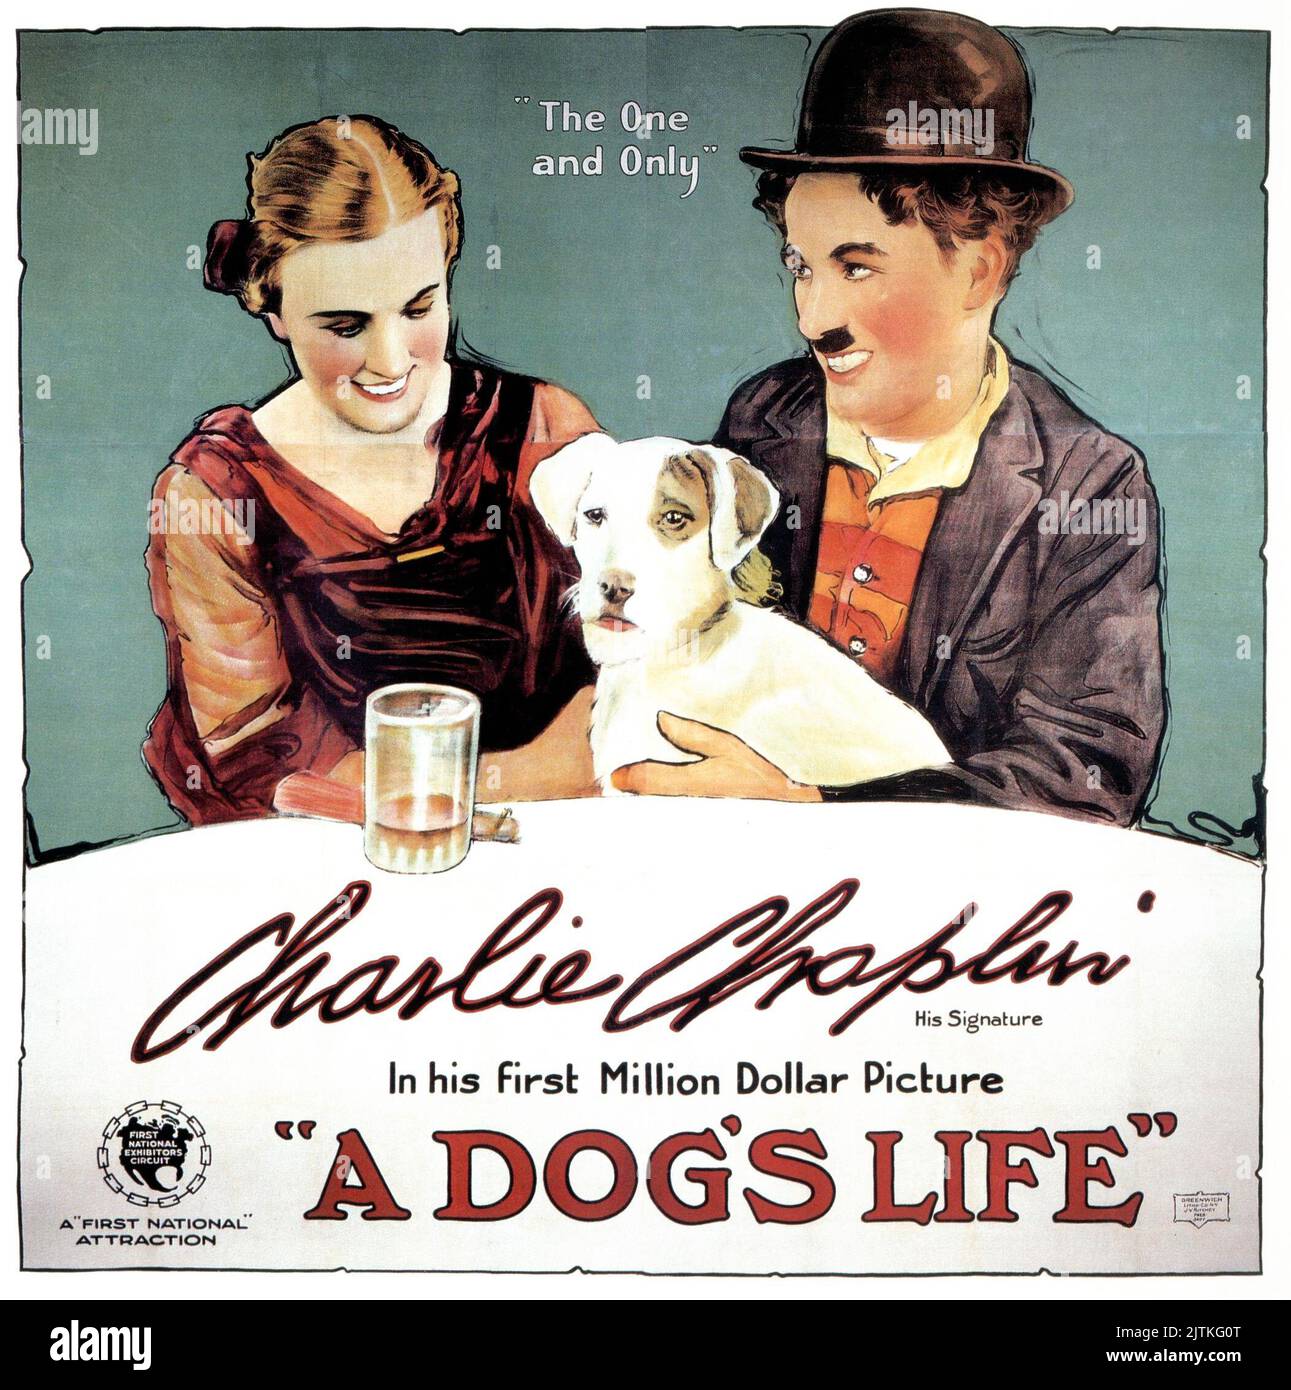 kinopoisk.ru Charlie Chaplin, vintage movie poster - A Dog's Life 1918 poster Stock Photo